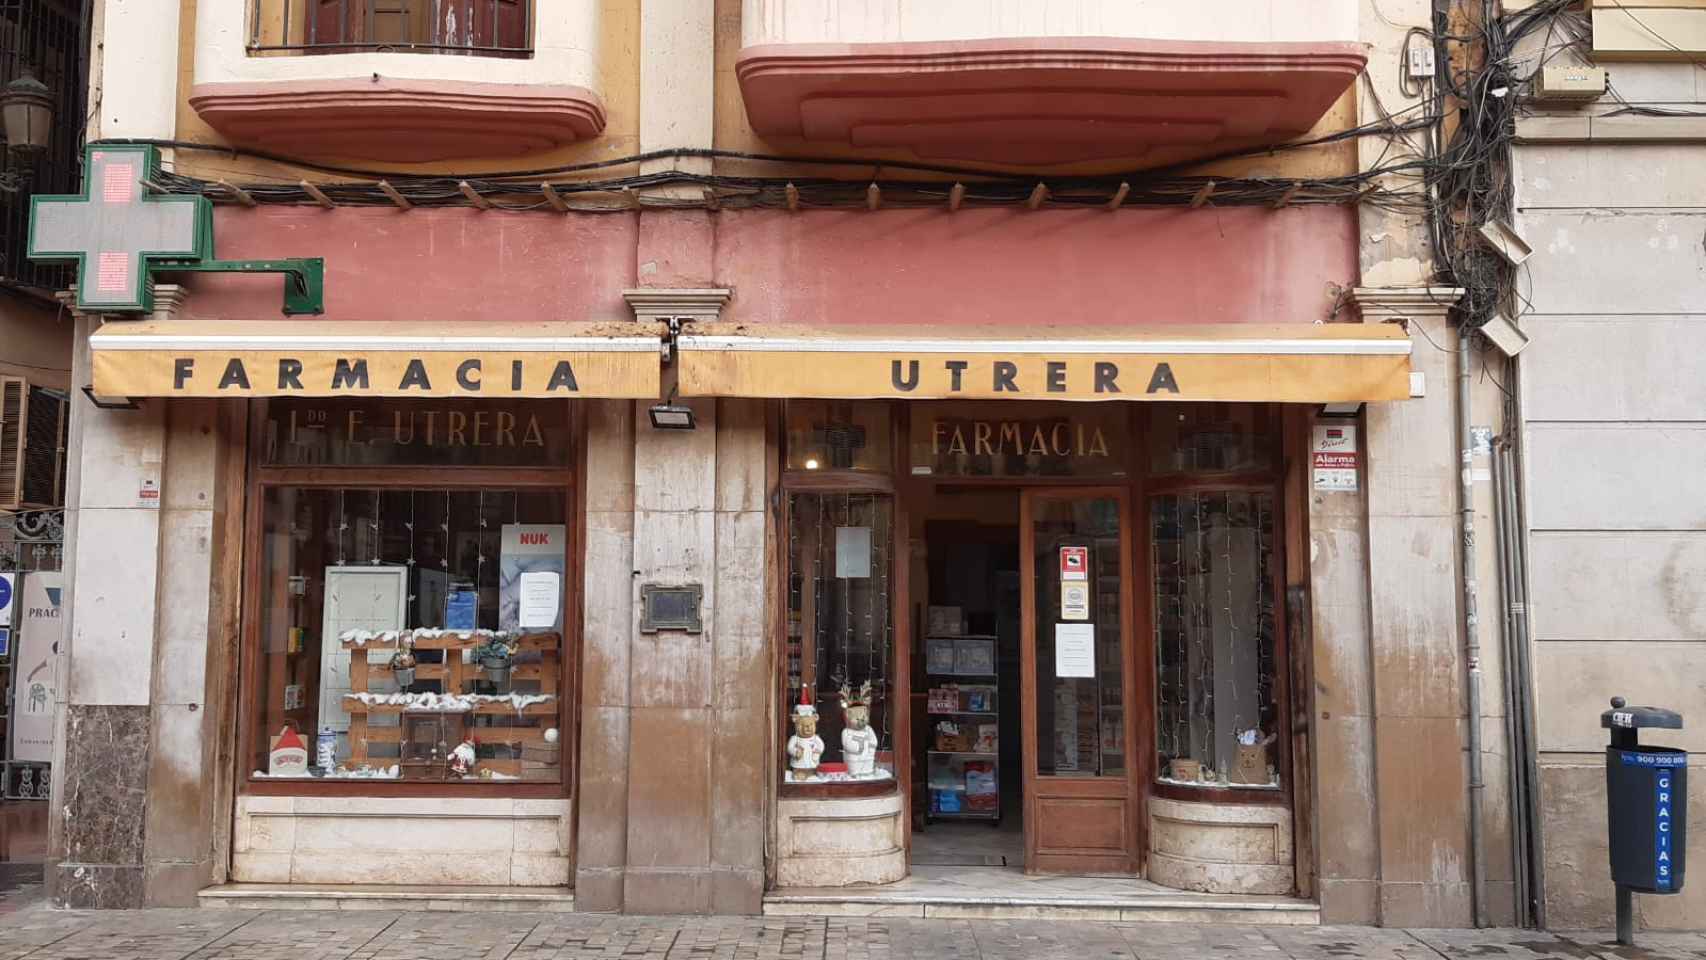 Fachada farmacia Utrera.